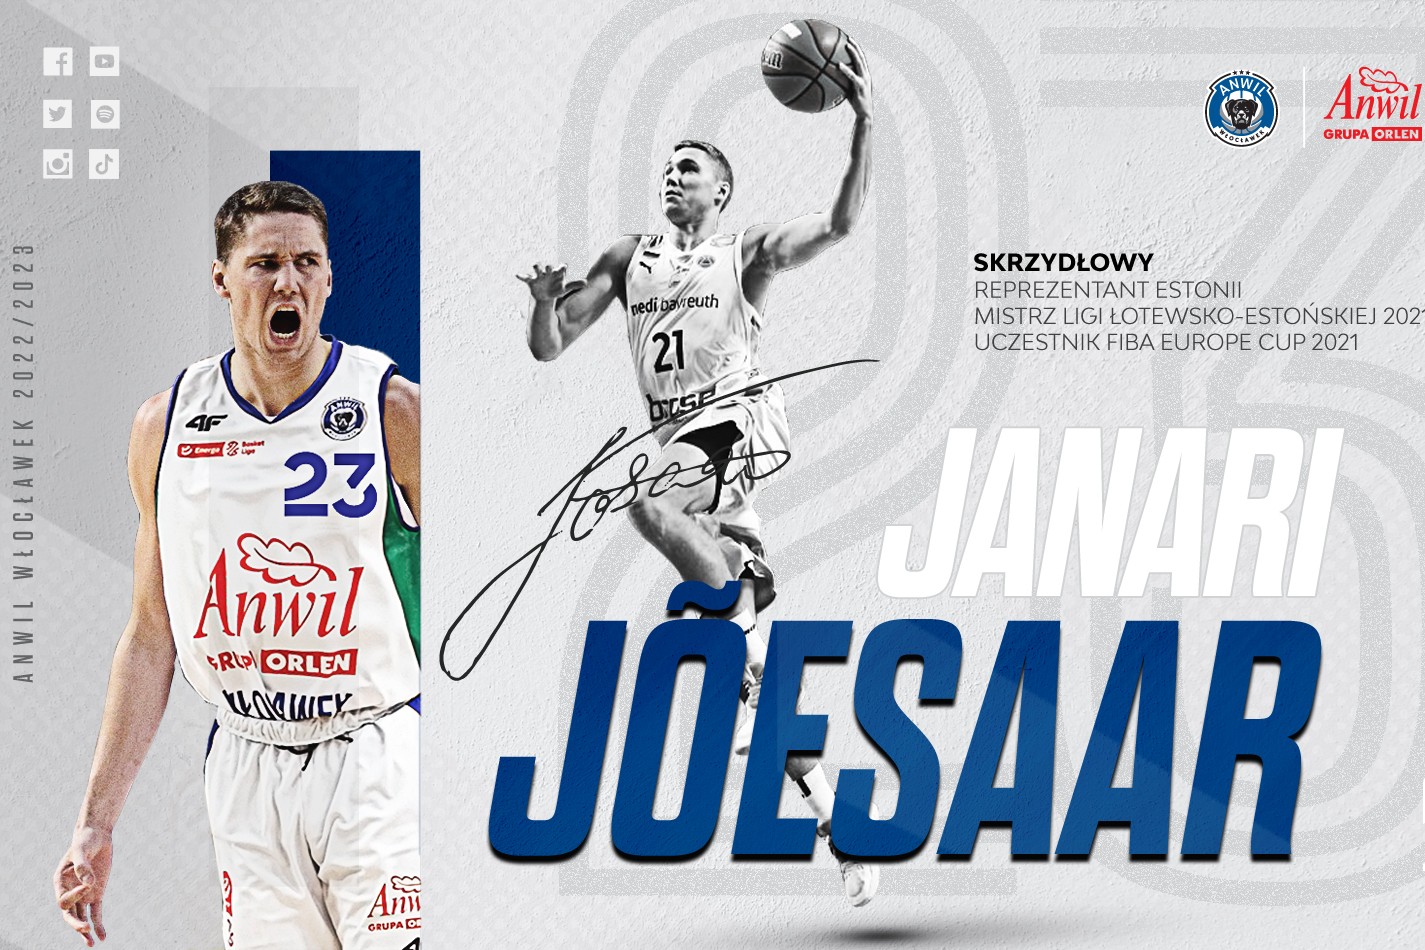 First Estonian In History - Janari Joesaar In Anwil